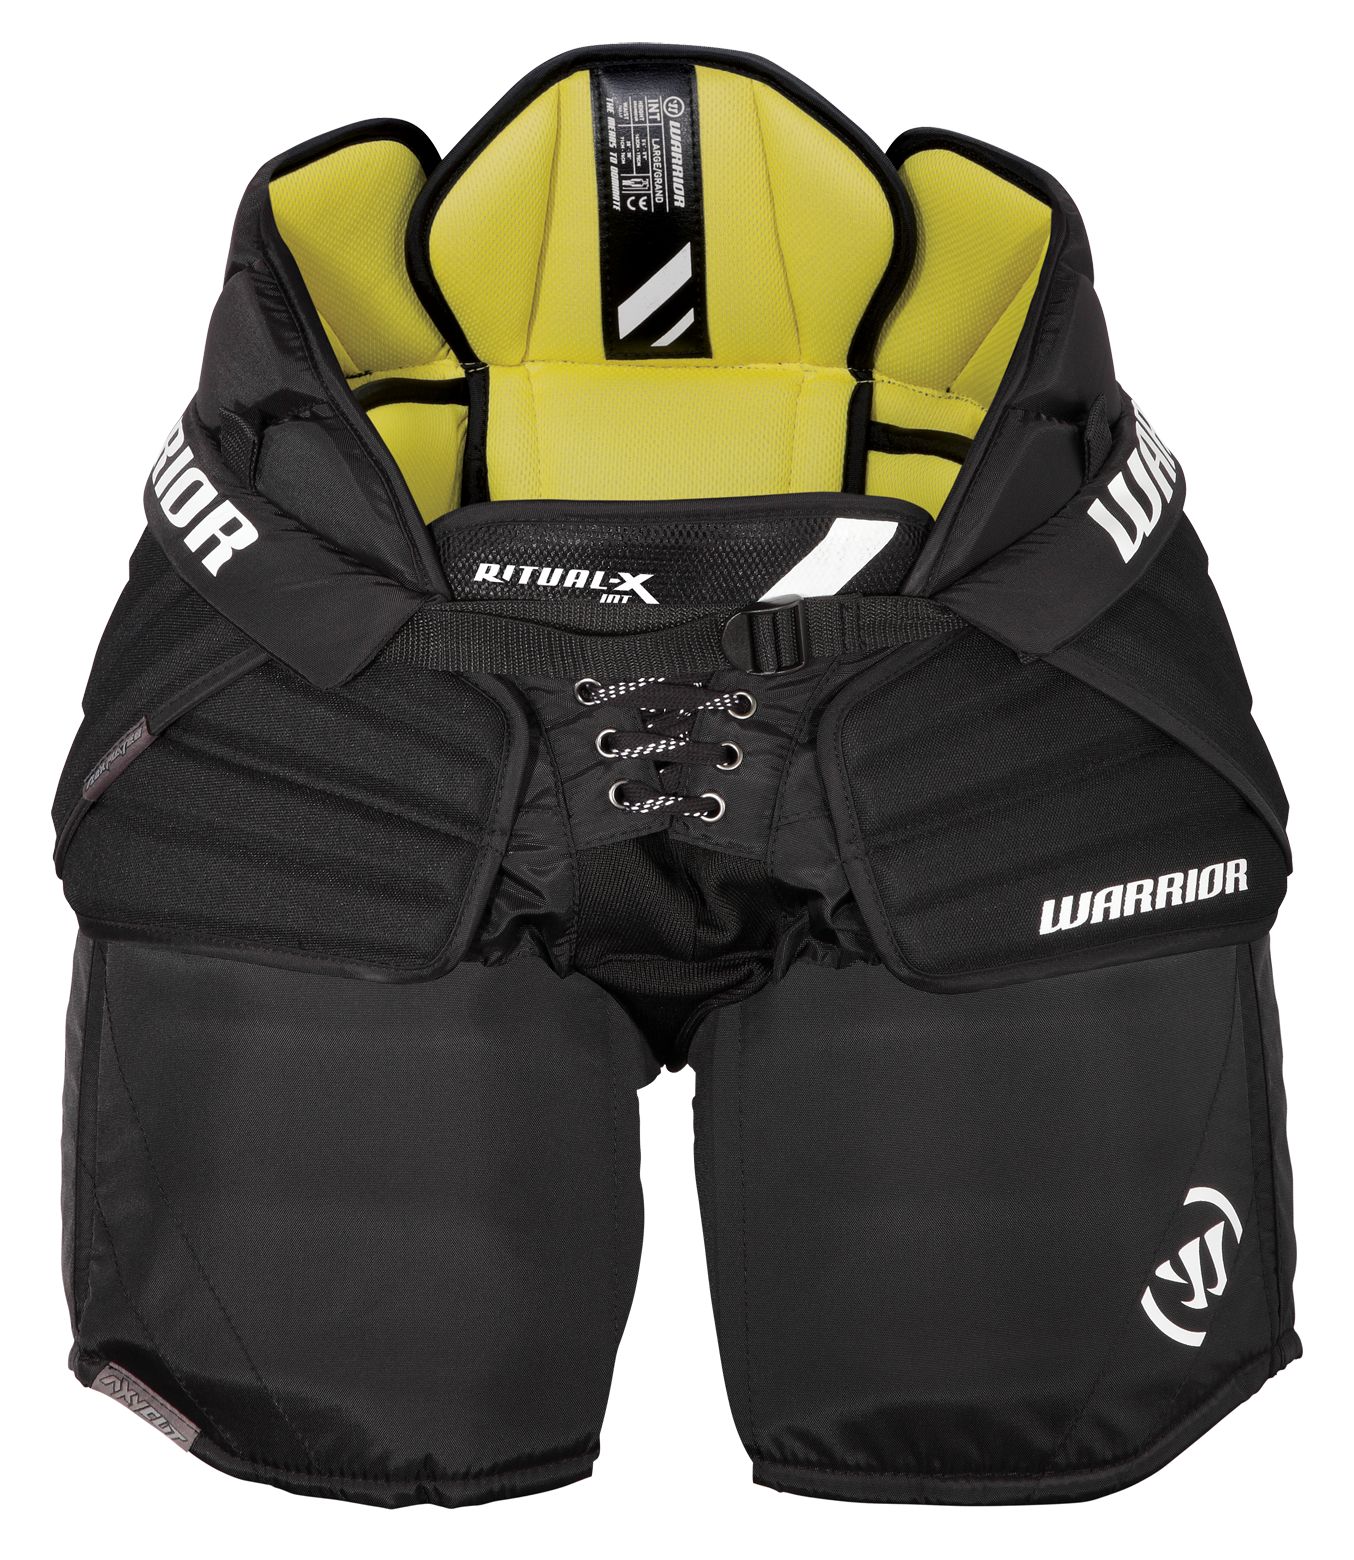 Ritual X Int. Goalie Pants, Black image number 0